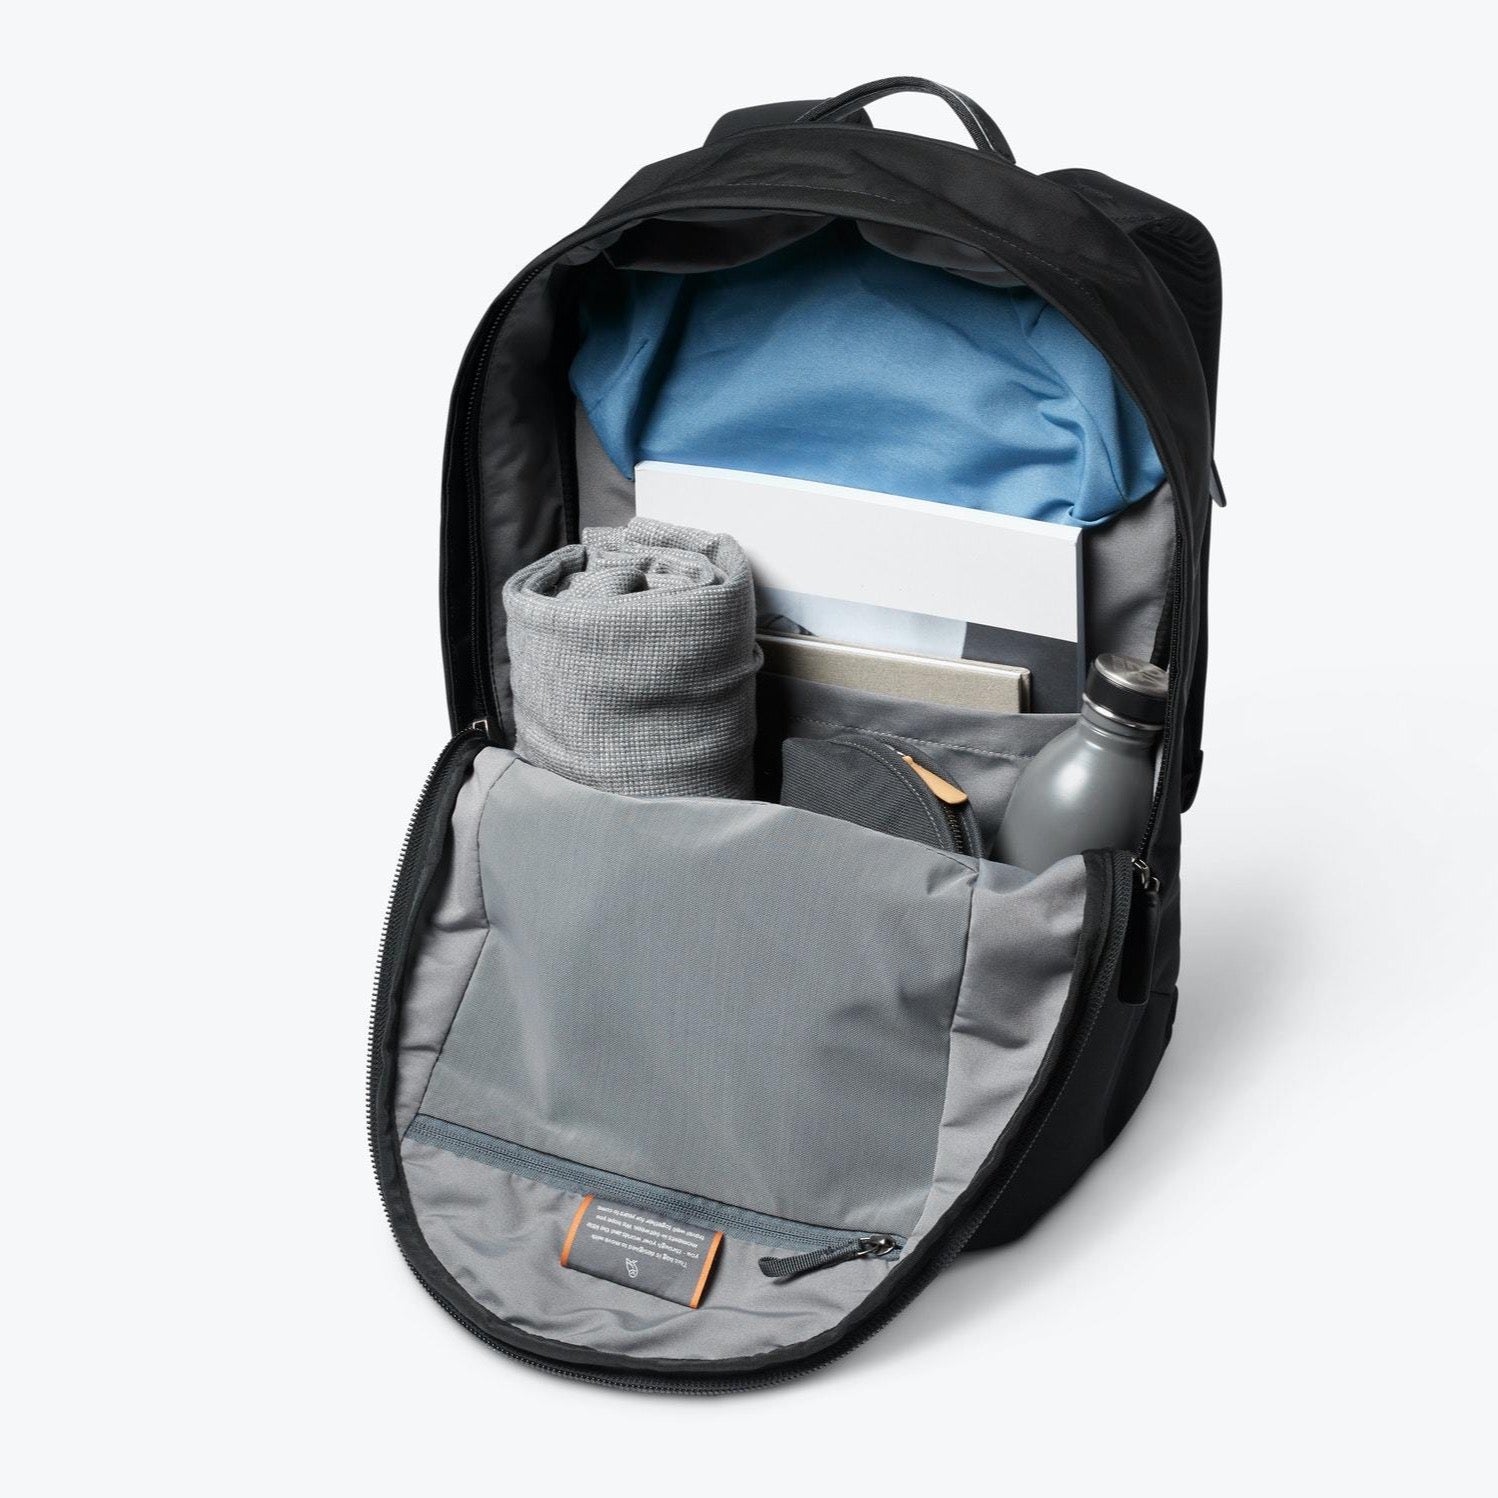 bellroy-classic-backpack-plus-black